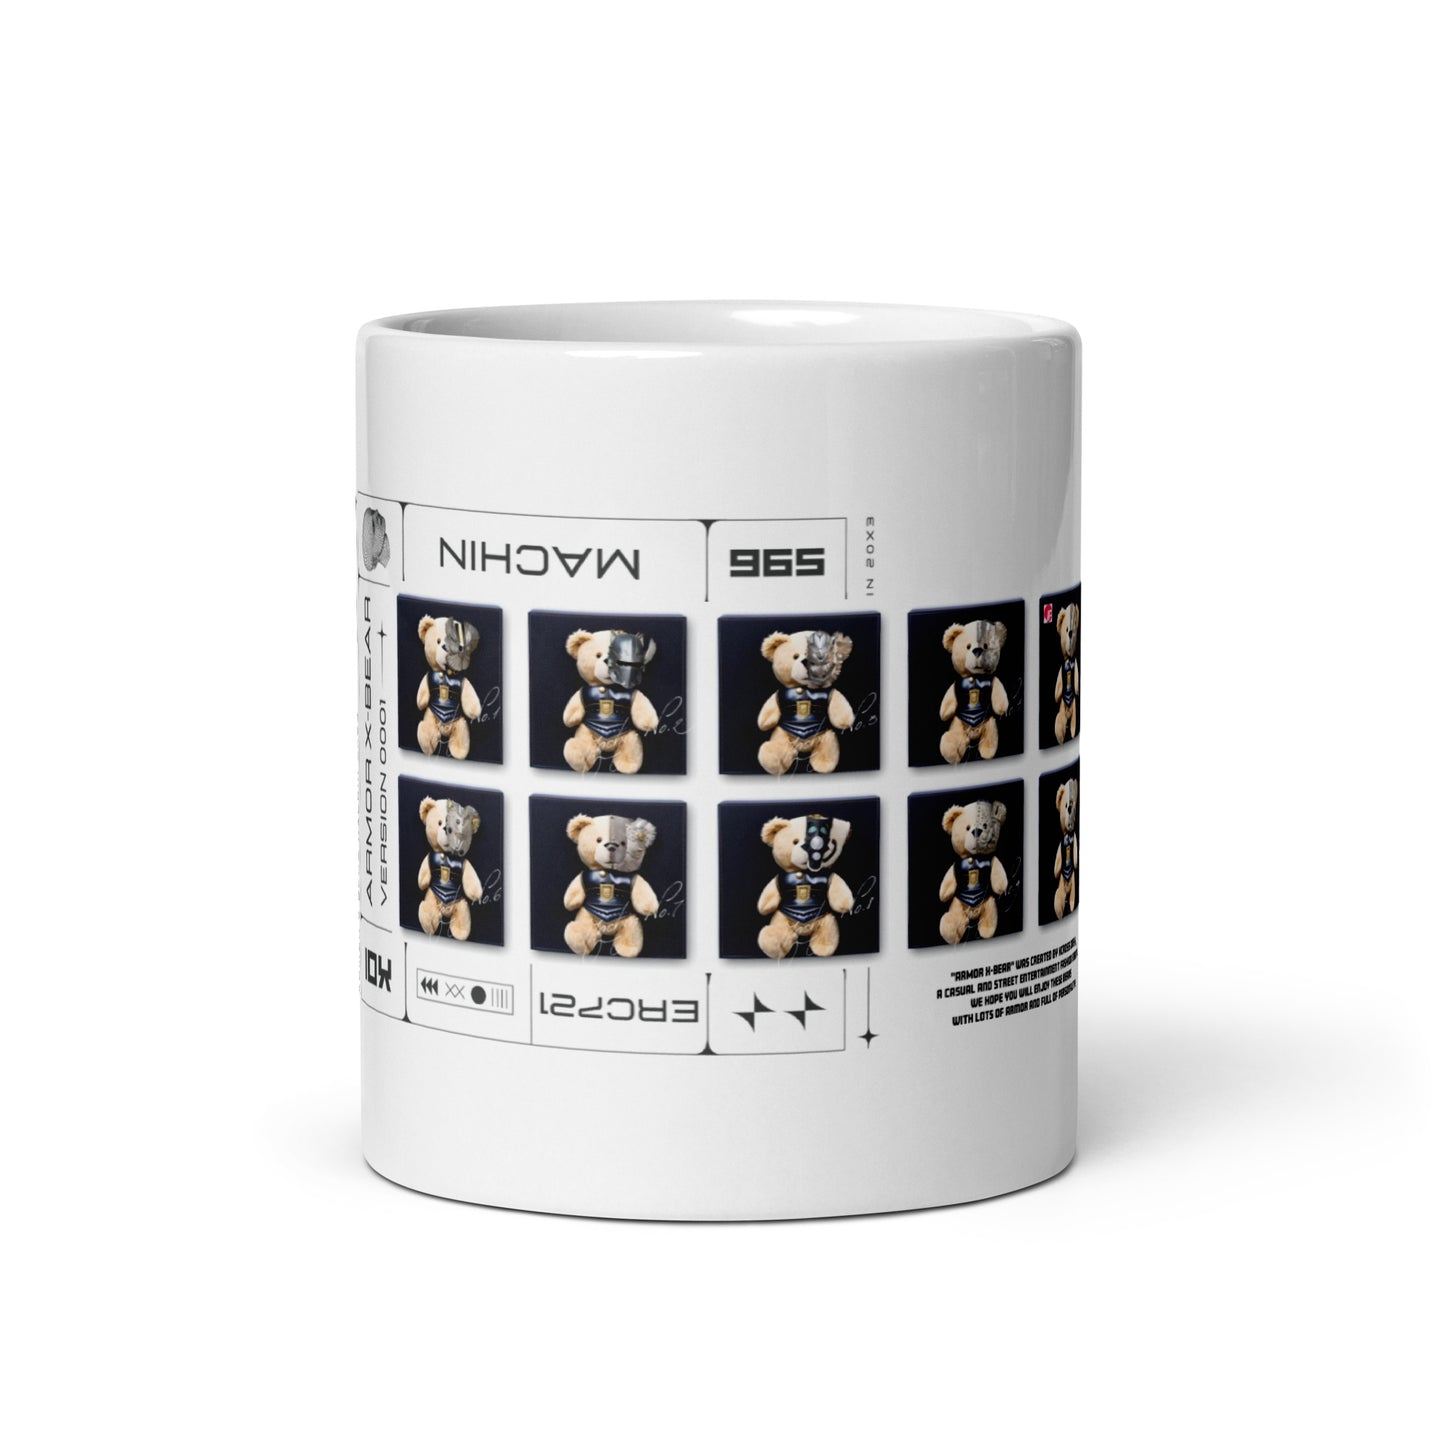 ARMOR X-BEAR VERSION #0001  White glossy mug  2type